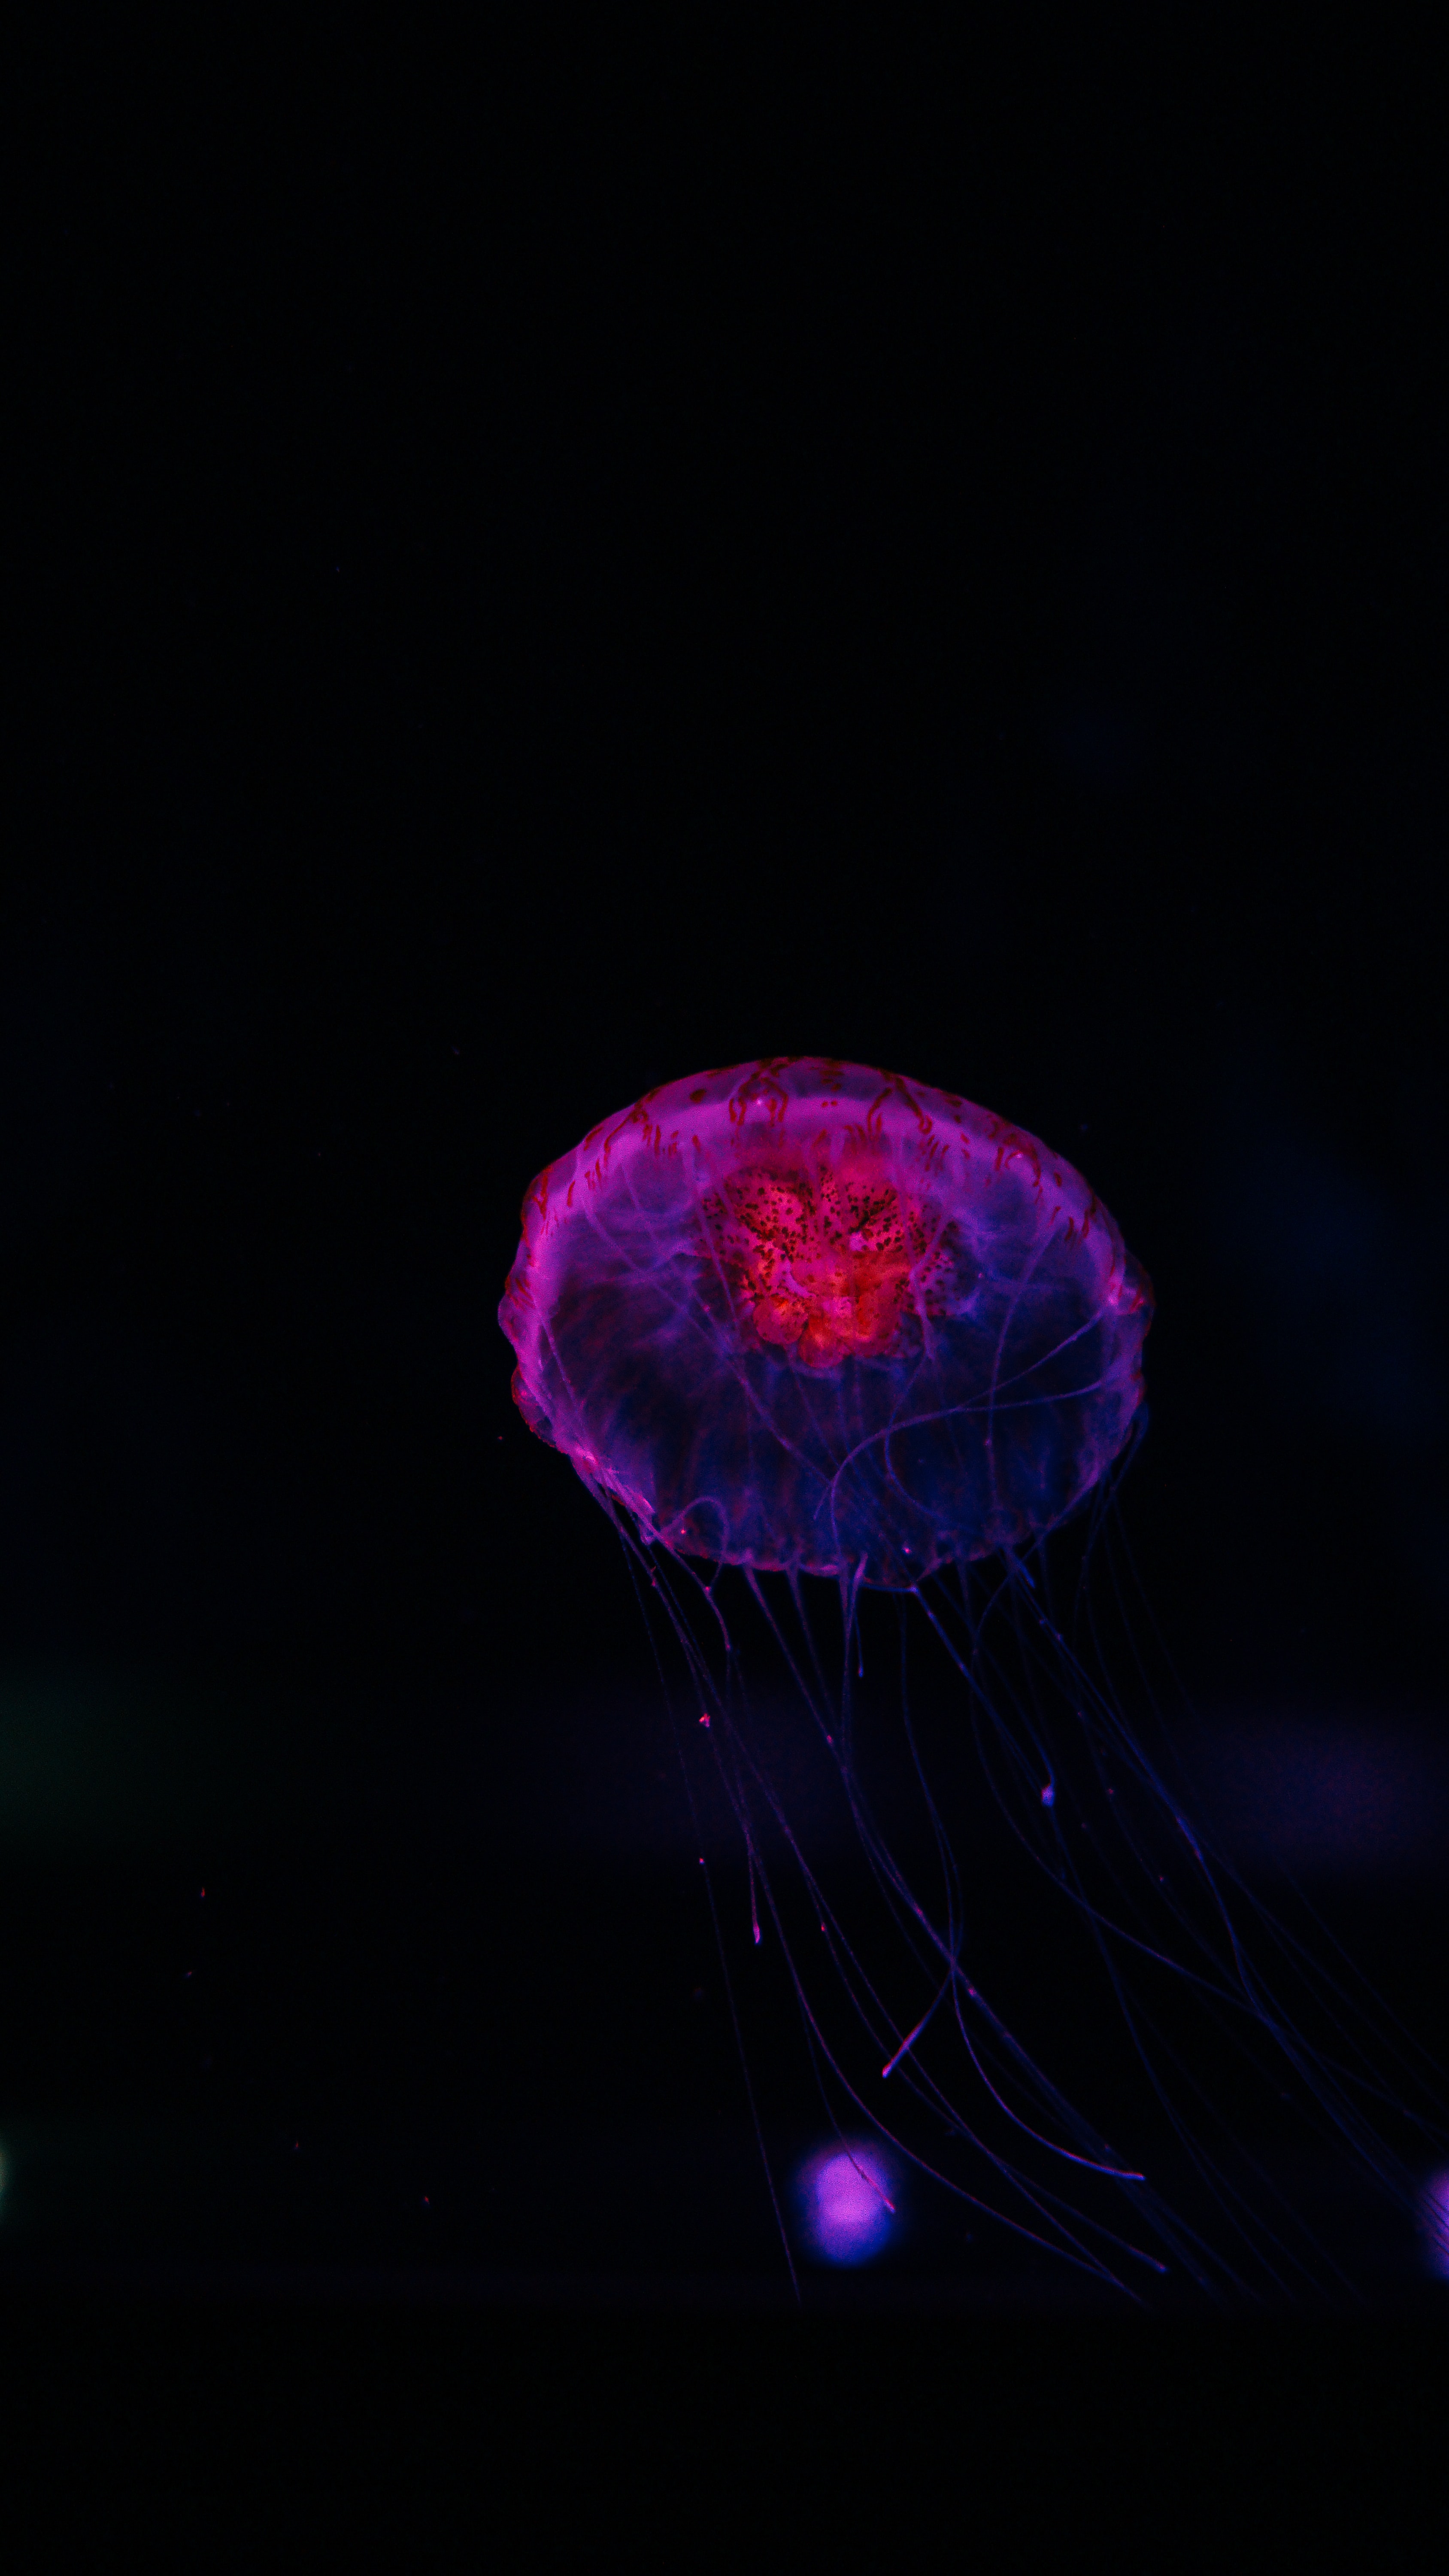 125580 descargar imagen medusa, oscuro, resplandor, resplandecer, mundo submarino: fondos de pantalla y protectores de pantalla gratis